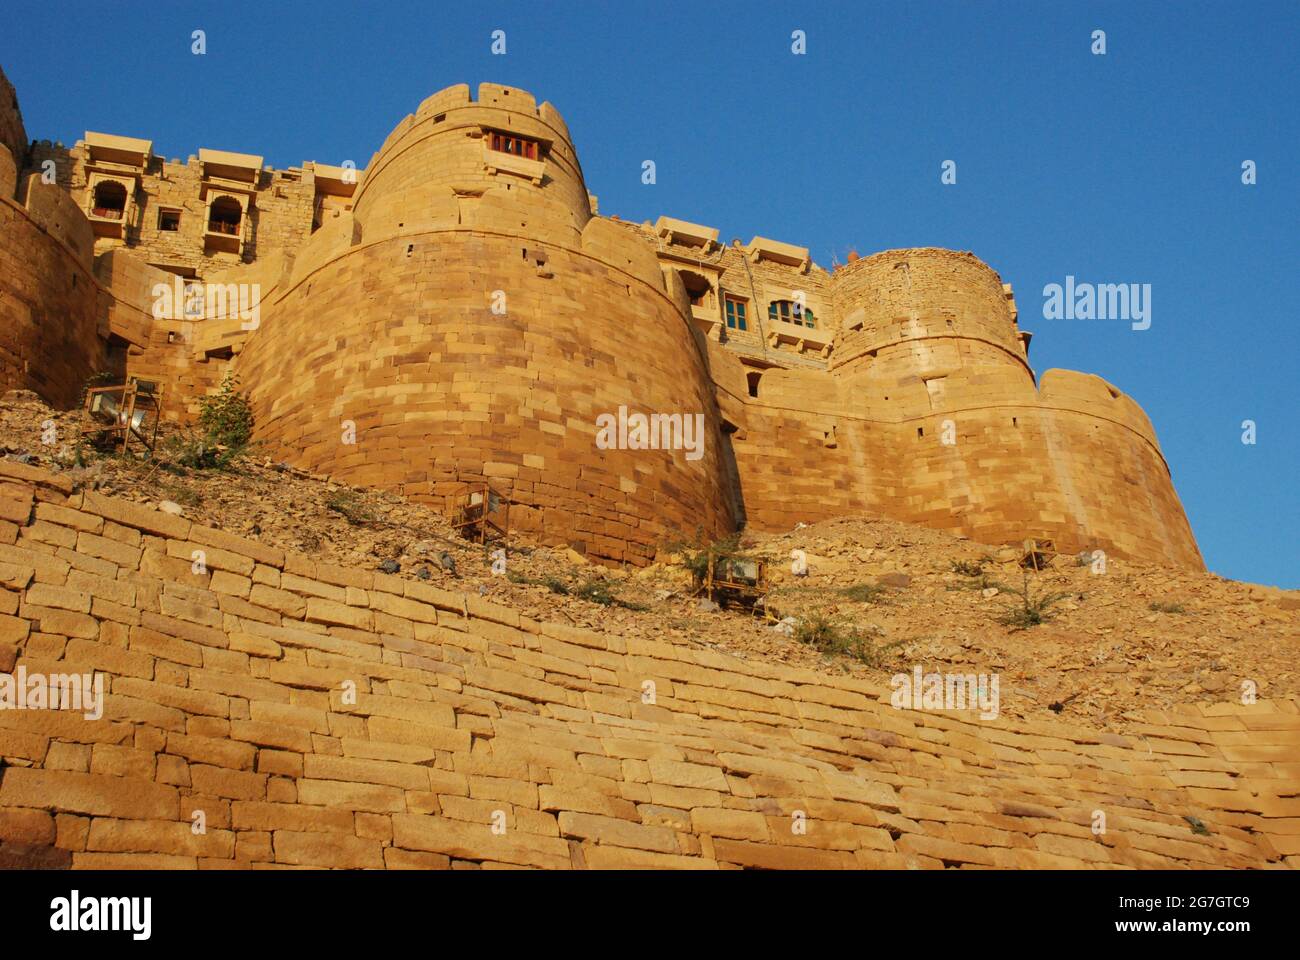 fortress mound of the caravan city of Jaisalmer, India, Radschastan, Jaisalmer Stock Photo